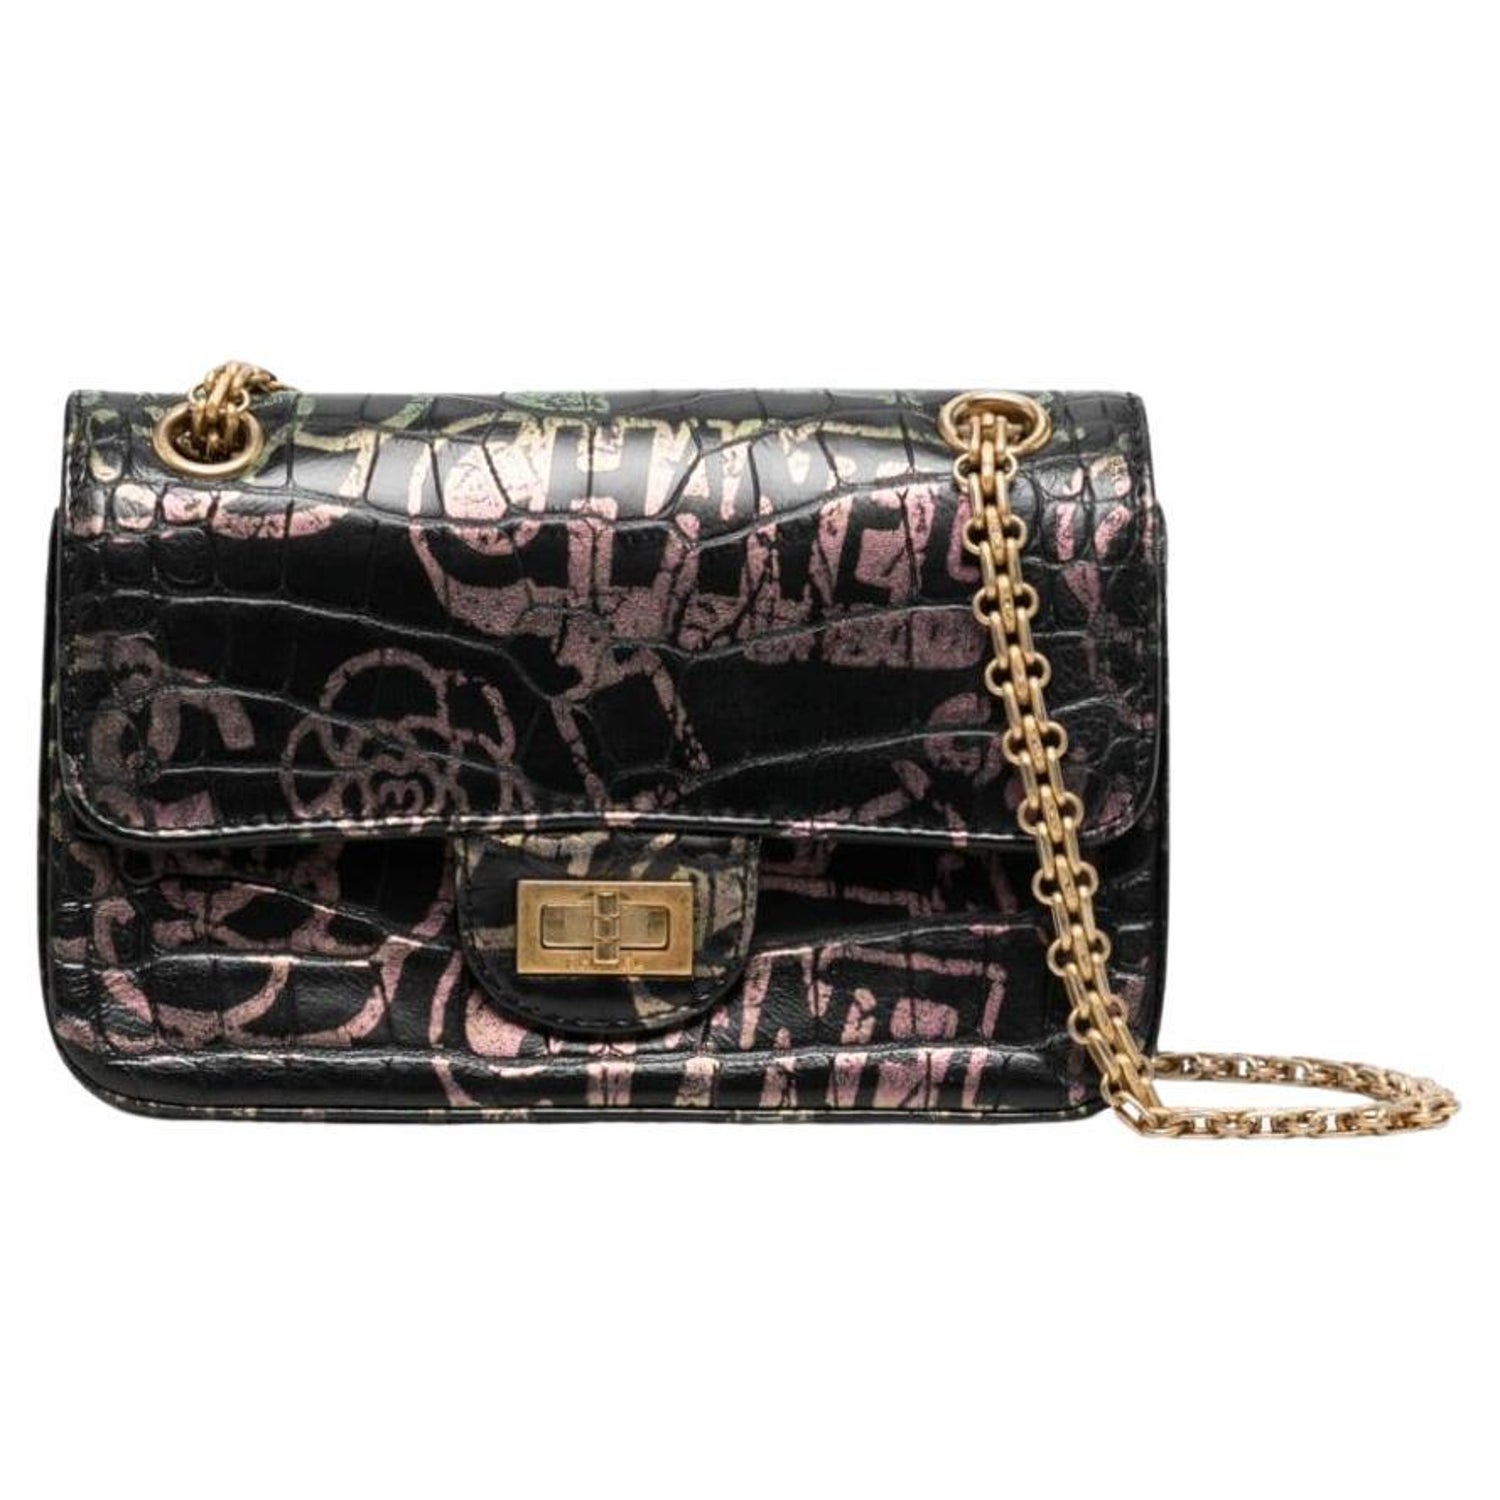 Chanel Croc Bag - 2 For Sale on 1stDibs